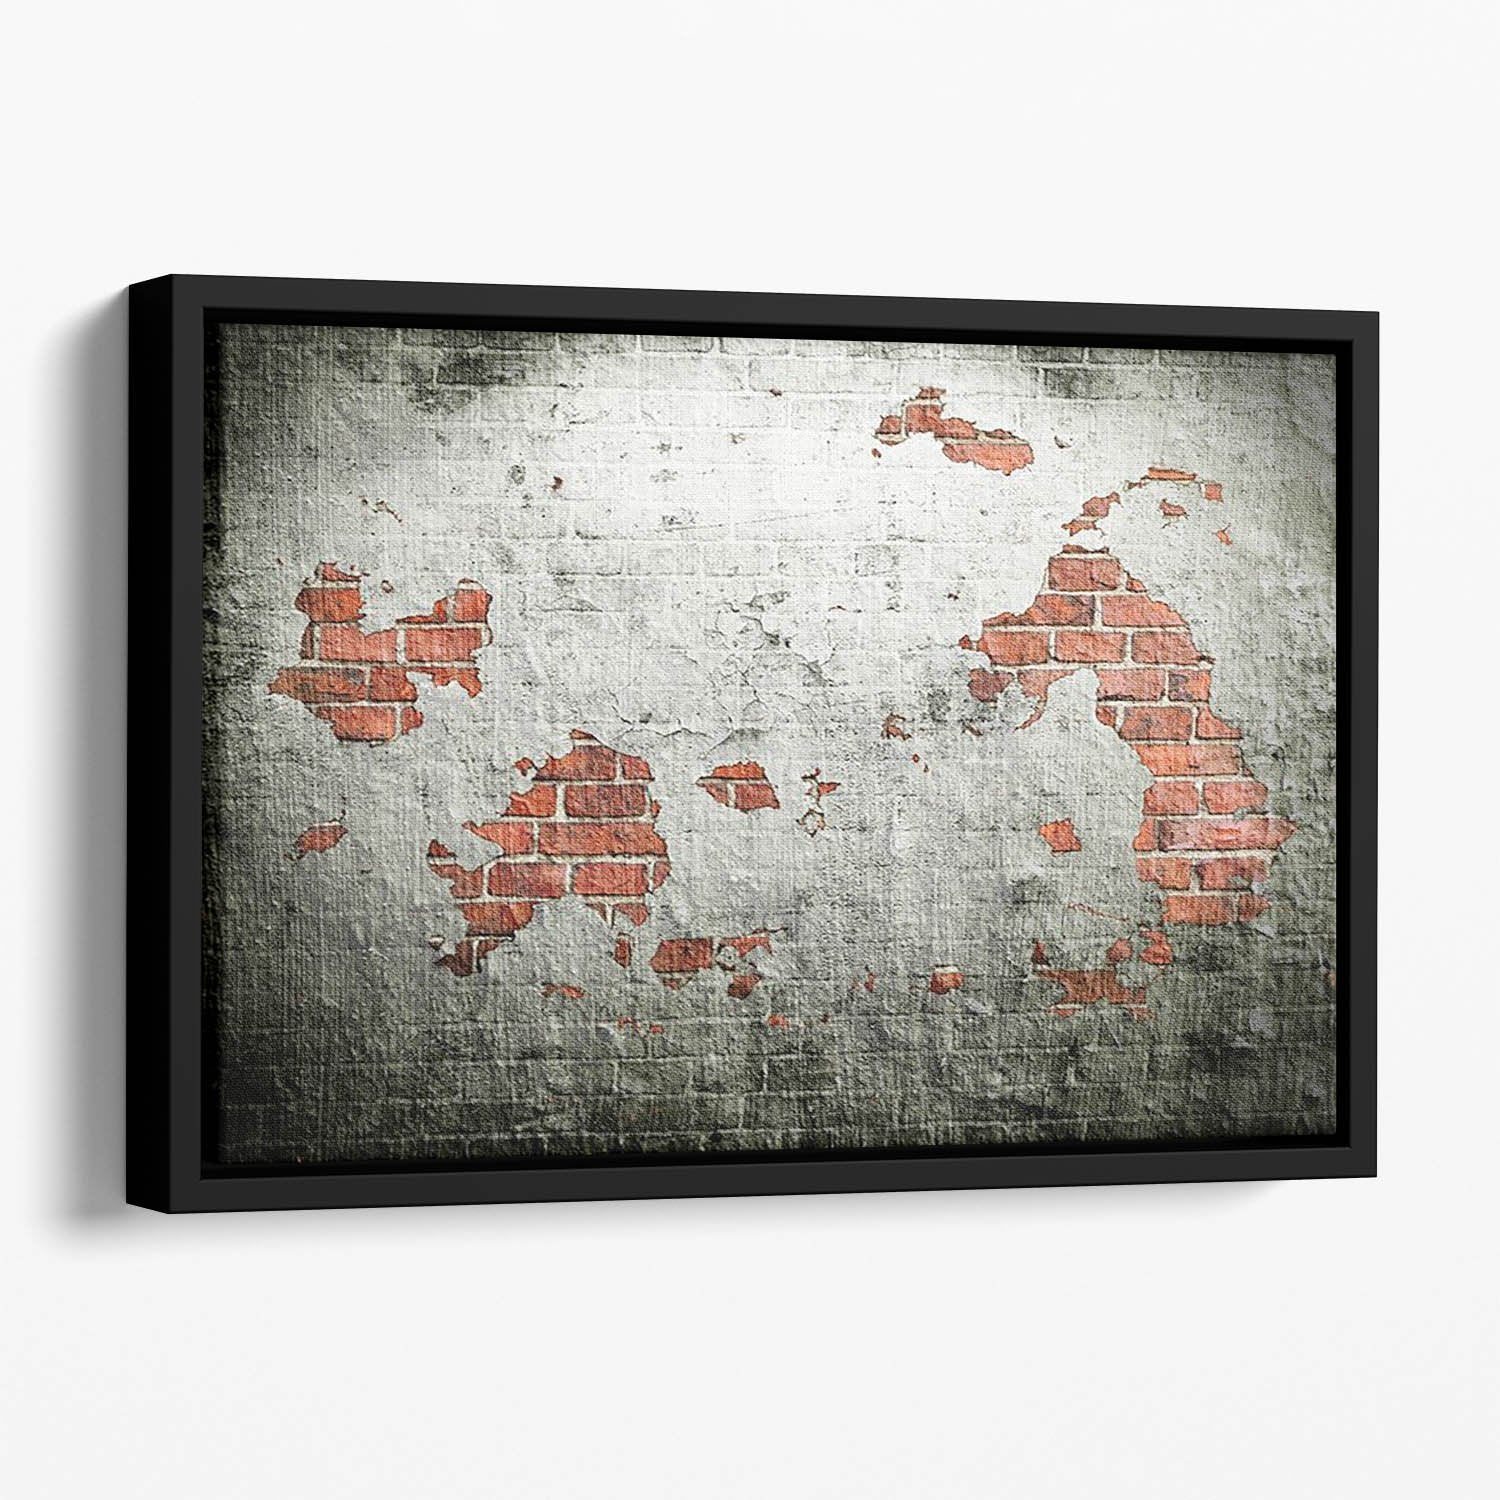 Grunge wall background Floating Framed Canvas